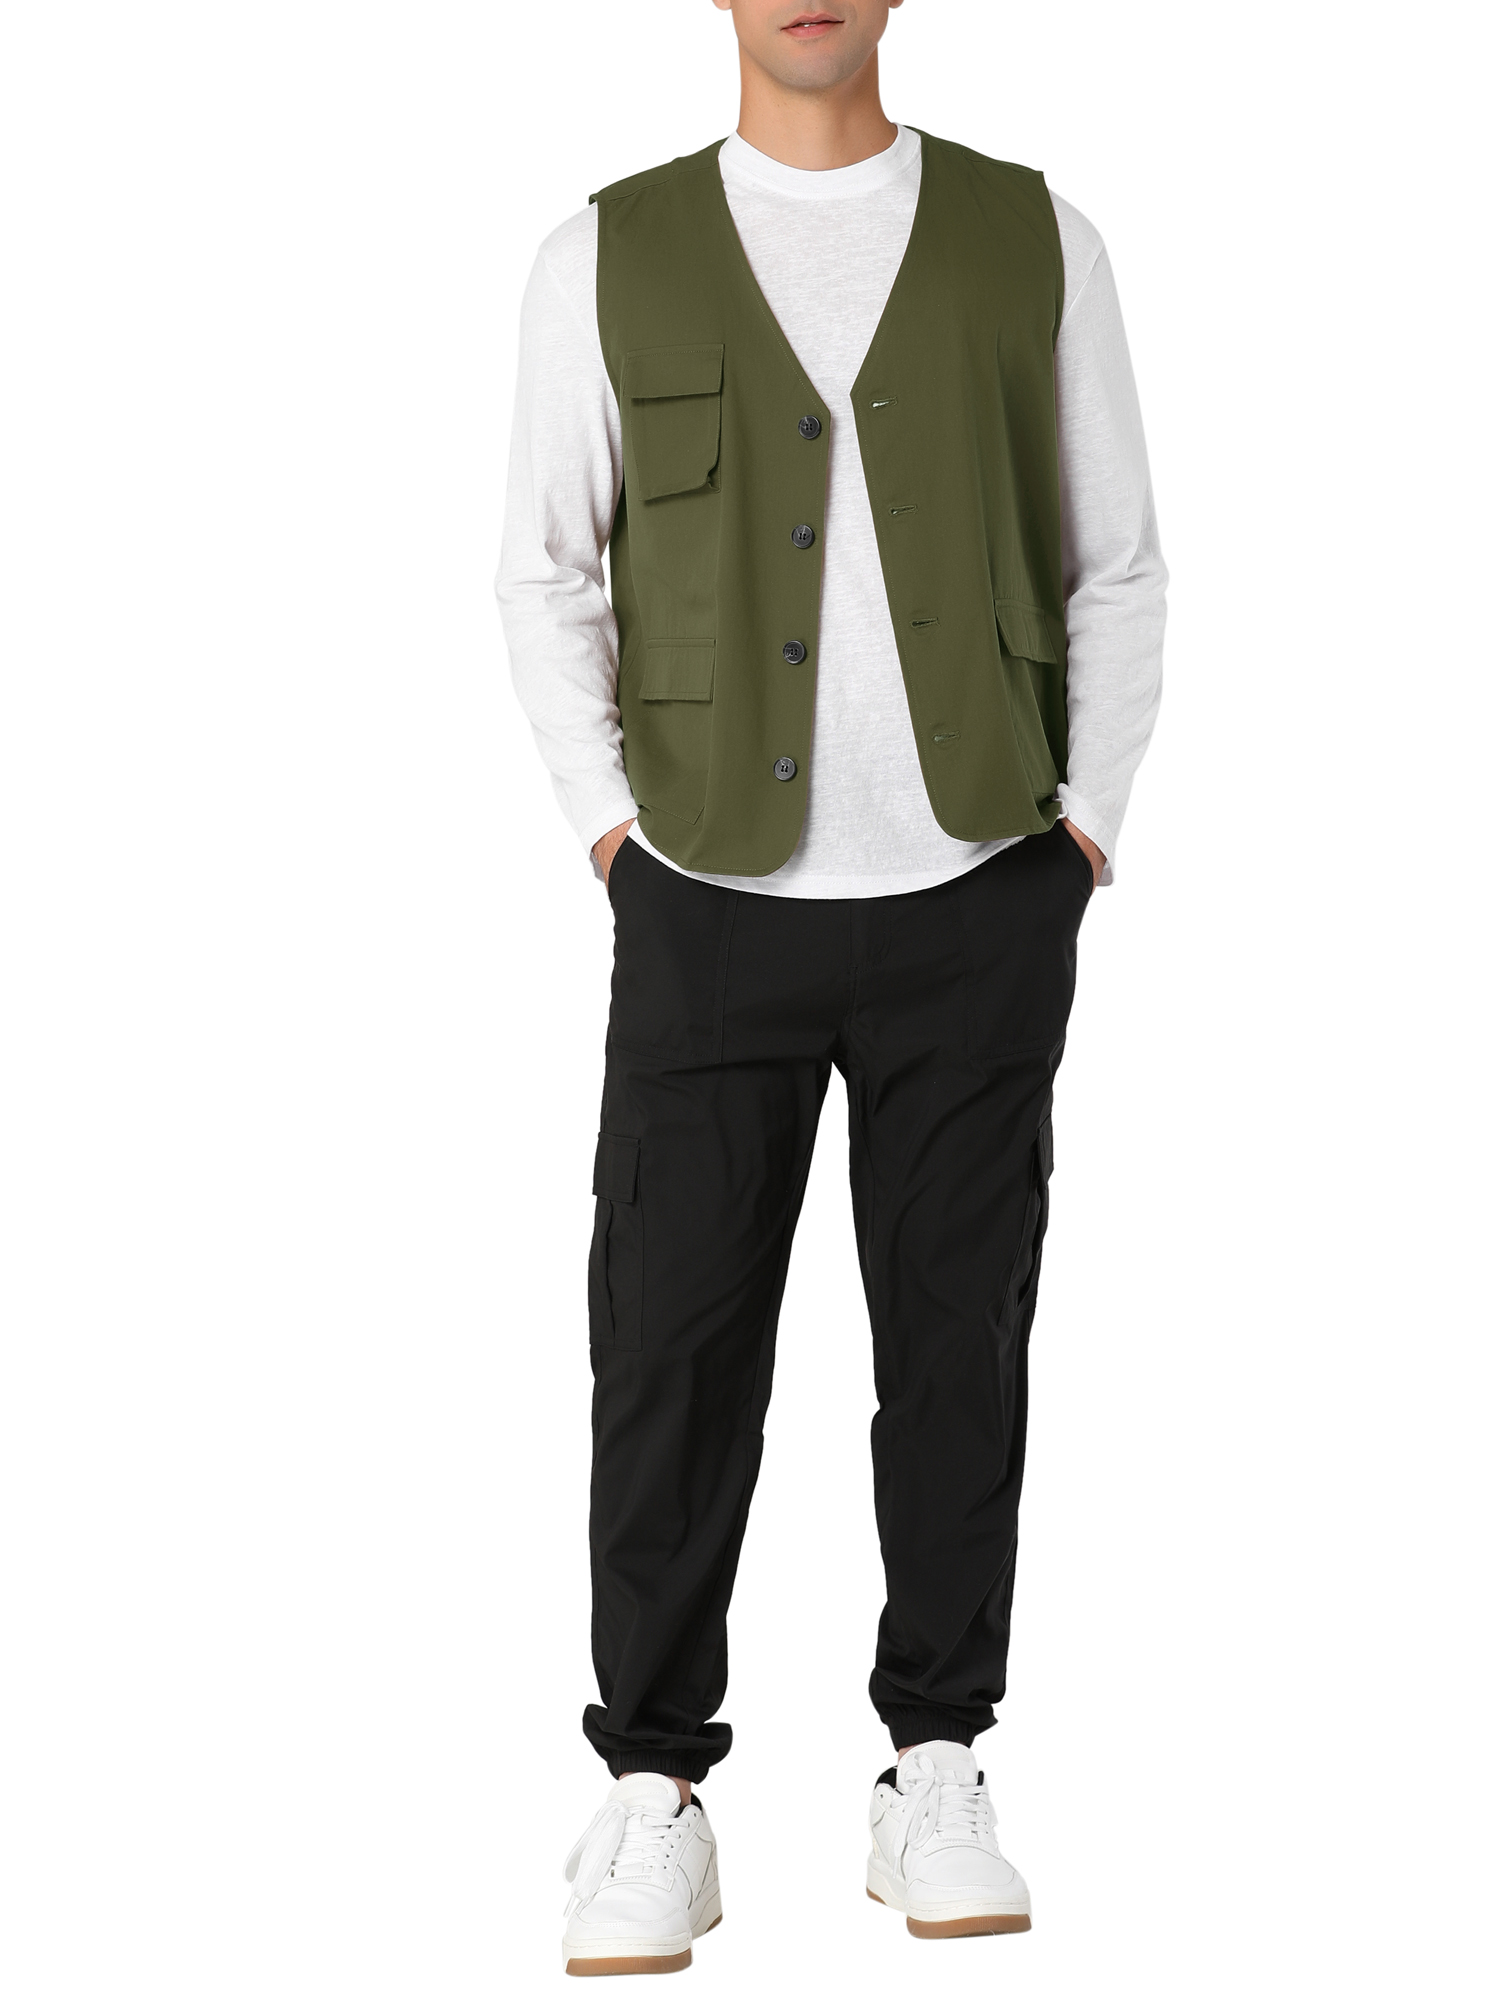 MODA NOVA Big & Tall Men's Waistcoats Casual Cotton Sleeveless Pockets Button Down V Neck Cargo Vests Green LT - image 2 of 5